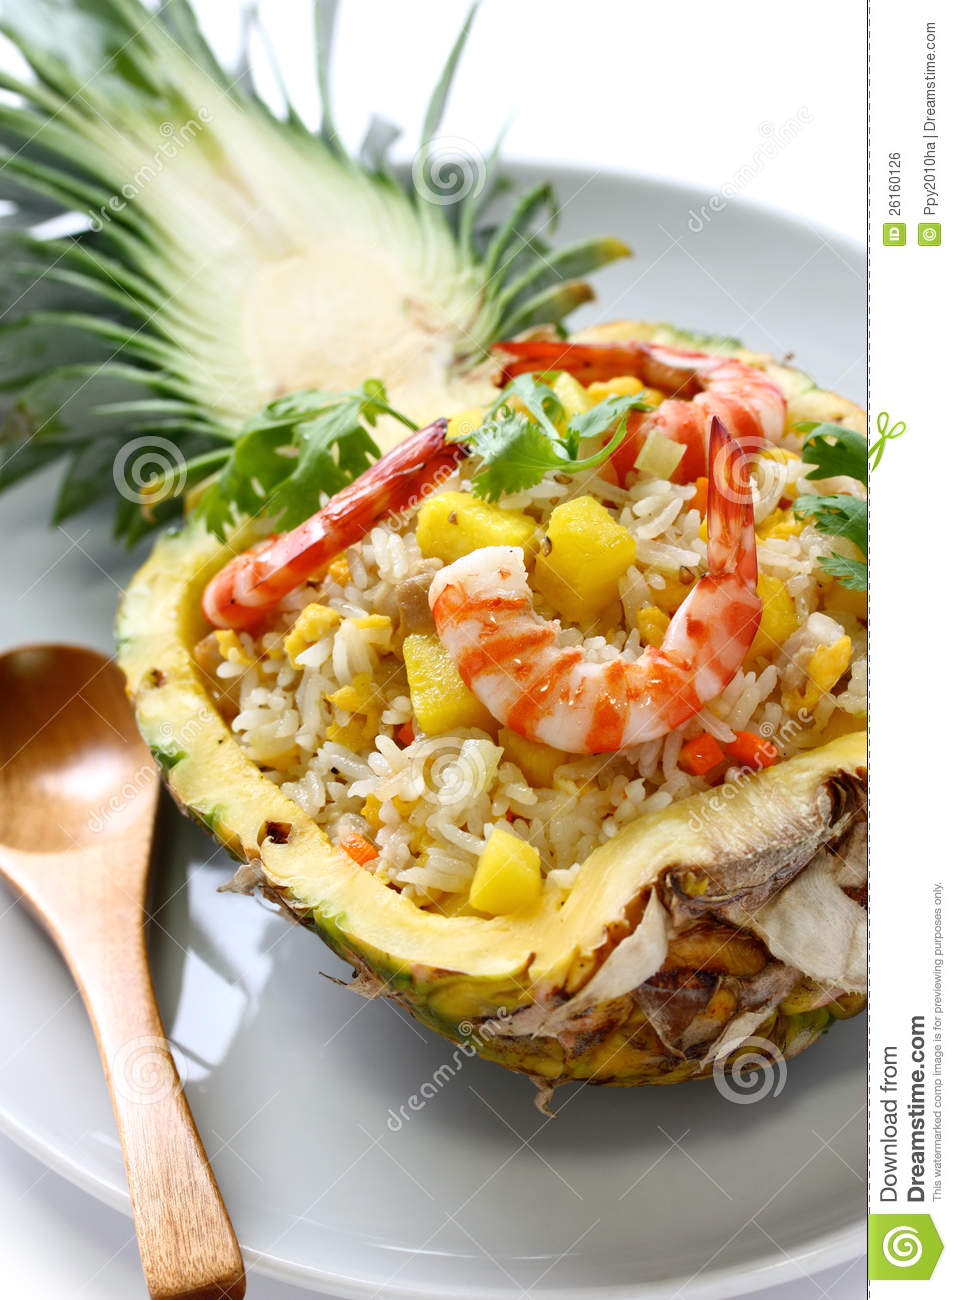 Pineapple Fried Rice Royalty Free Stock Image   Image  26160126